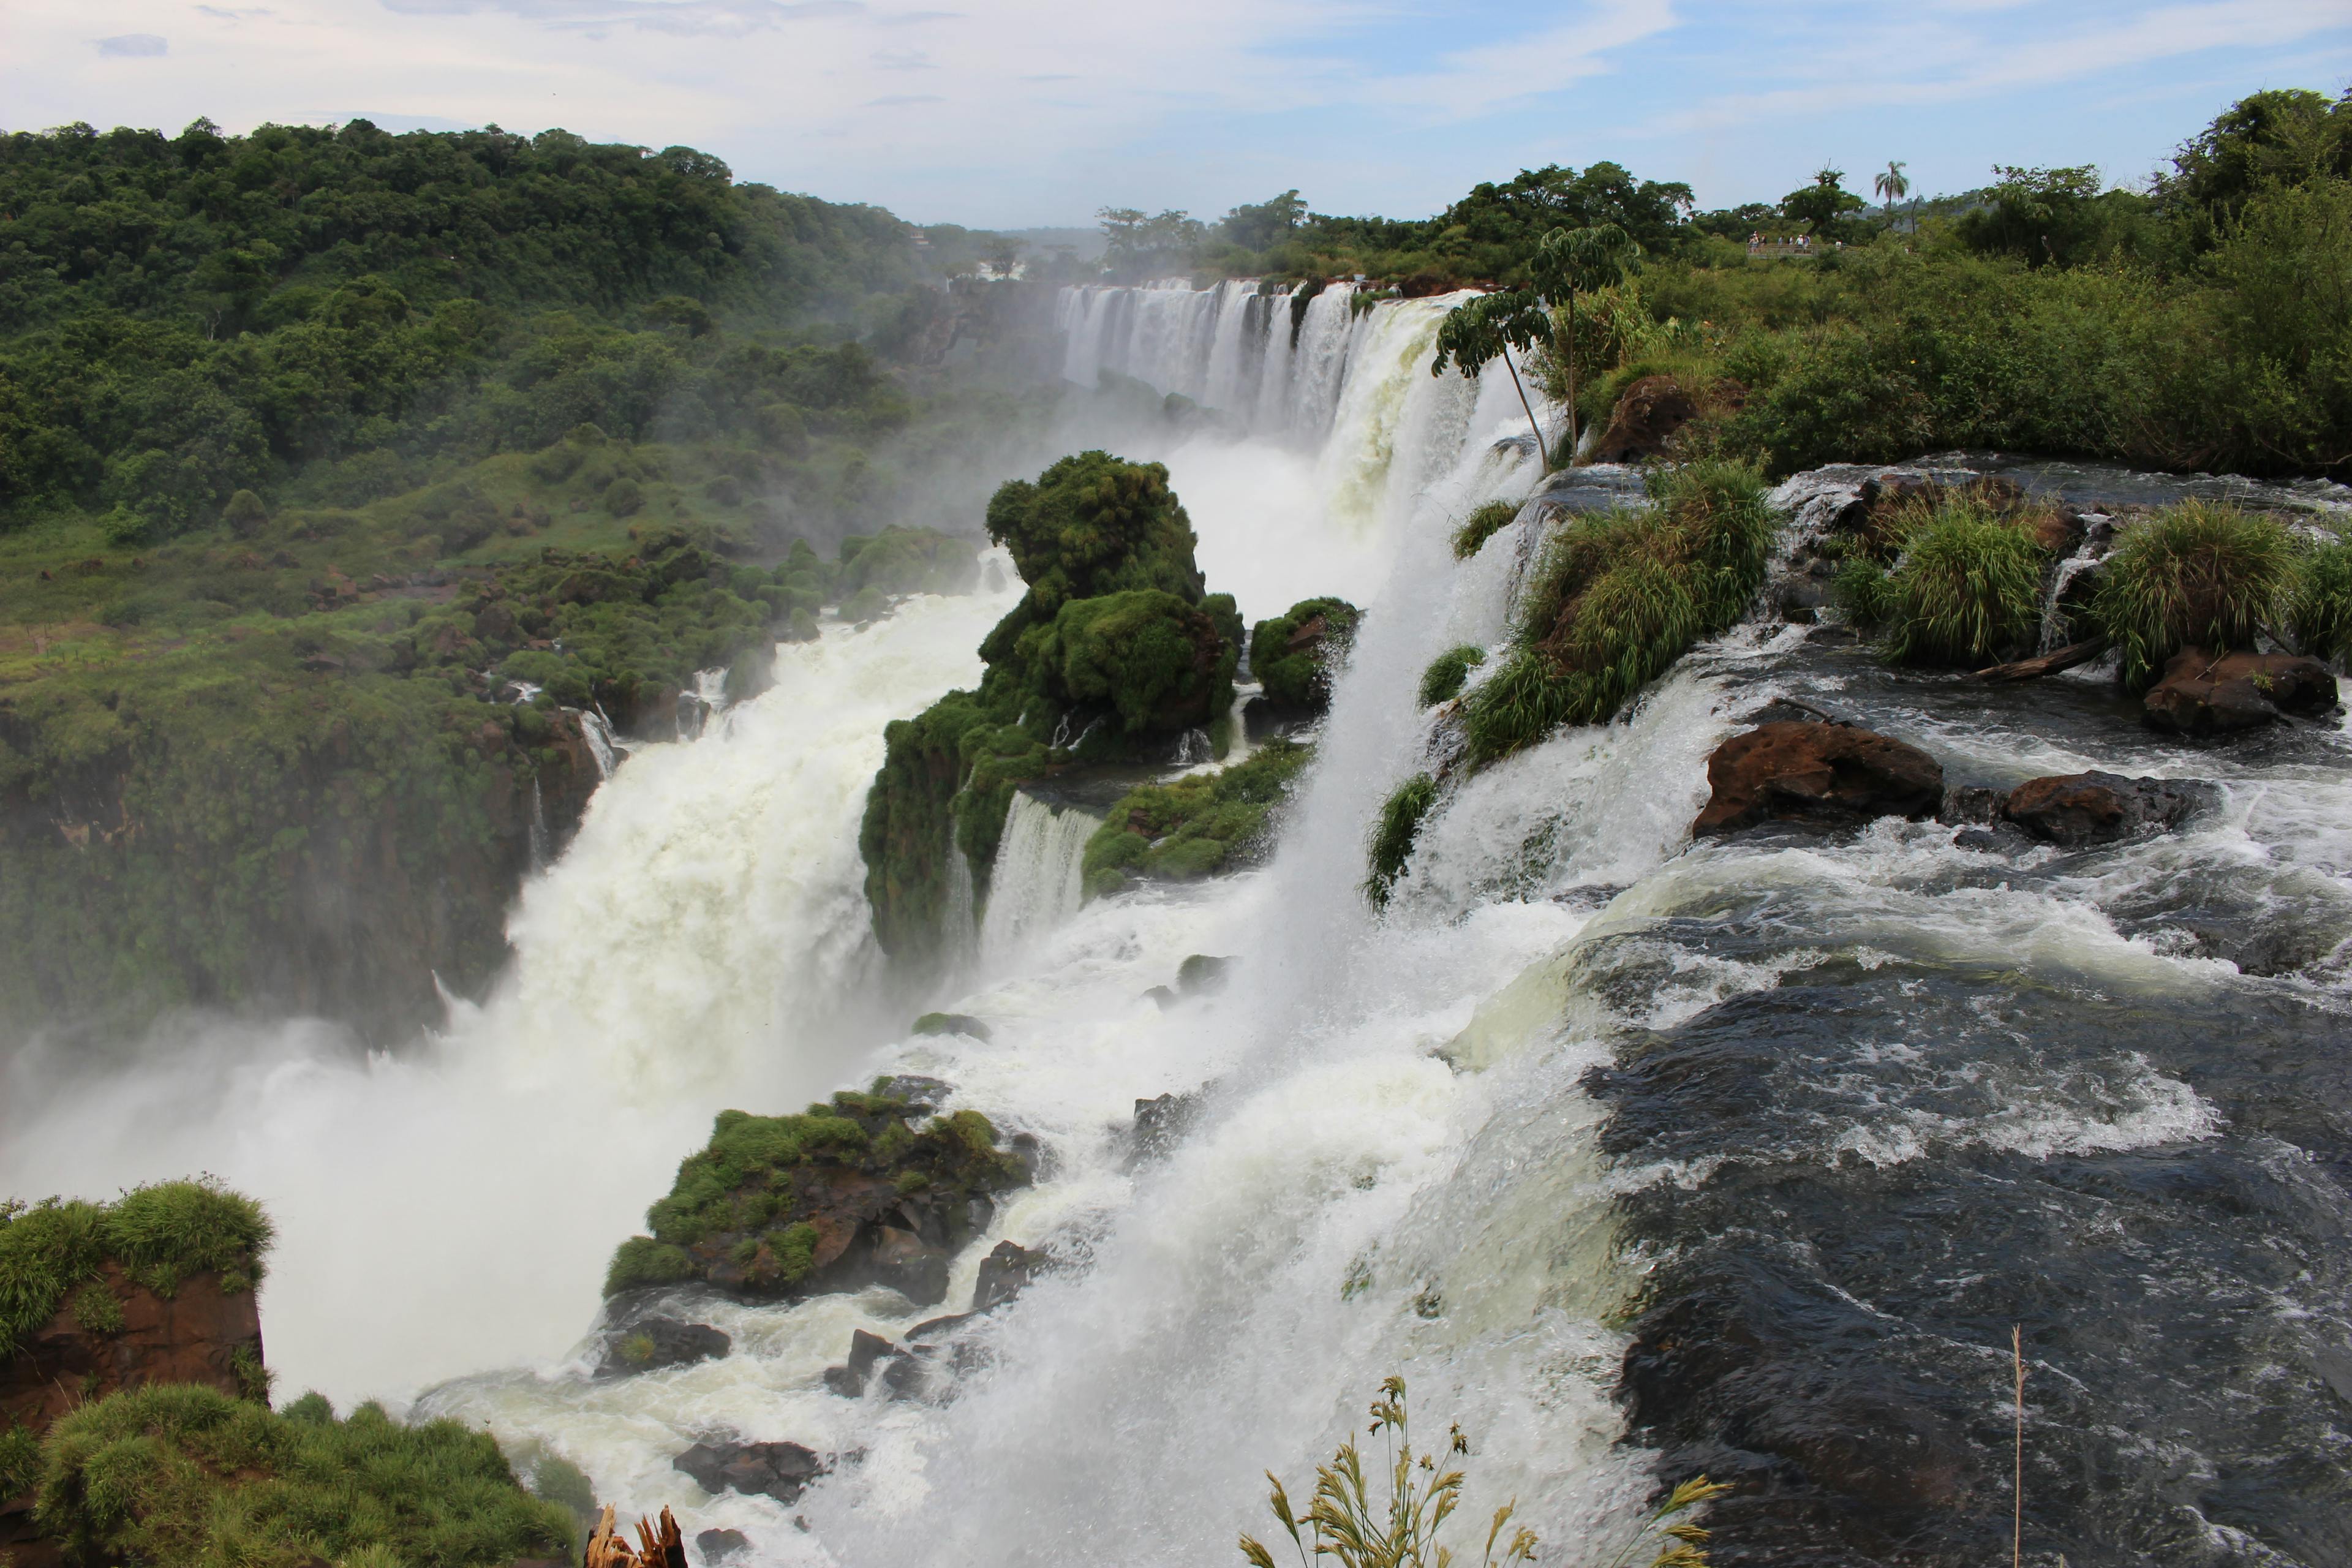 Peering over Iguazú Falls